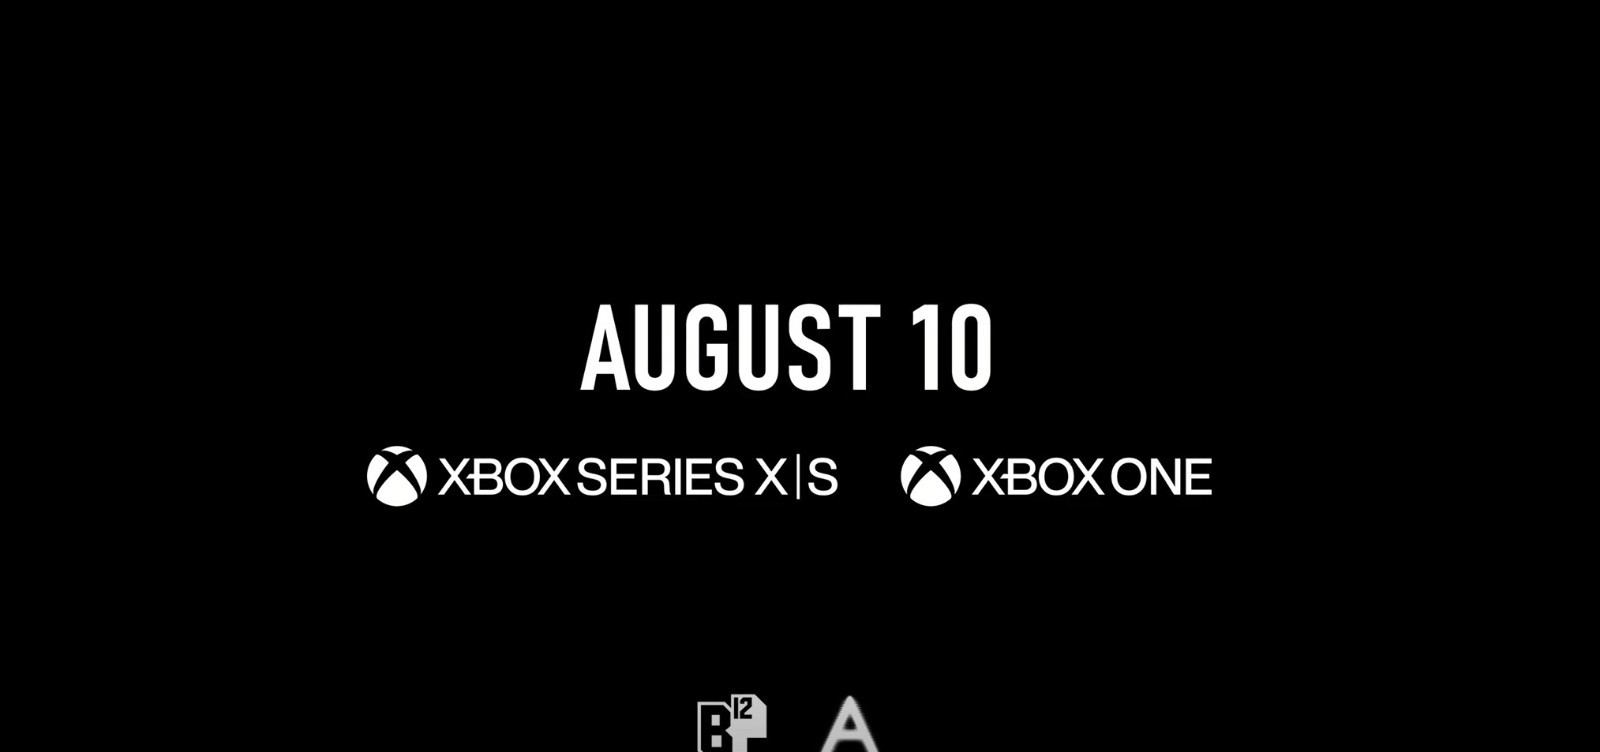 【PC游戏】好评游戏《迷失》将于8月10日登陆Xbox One、Xbox Series X/S-第4张